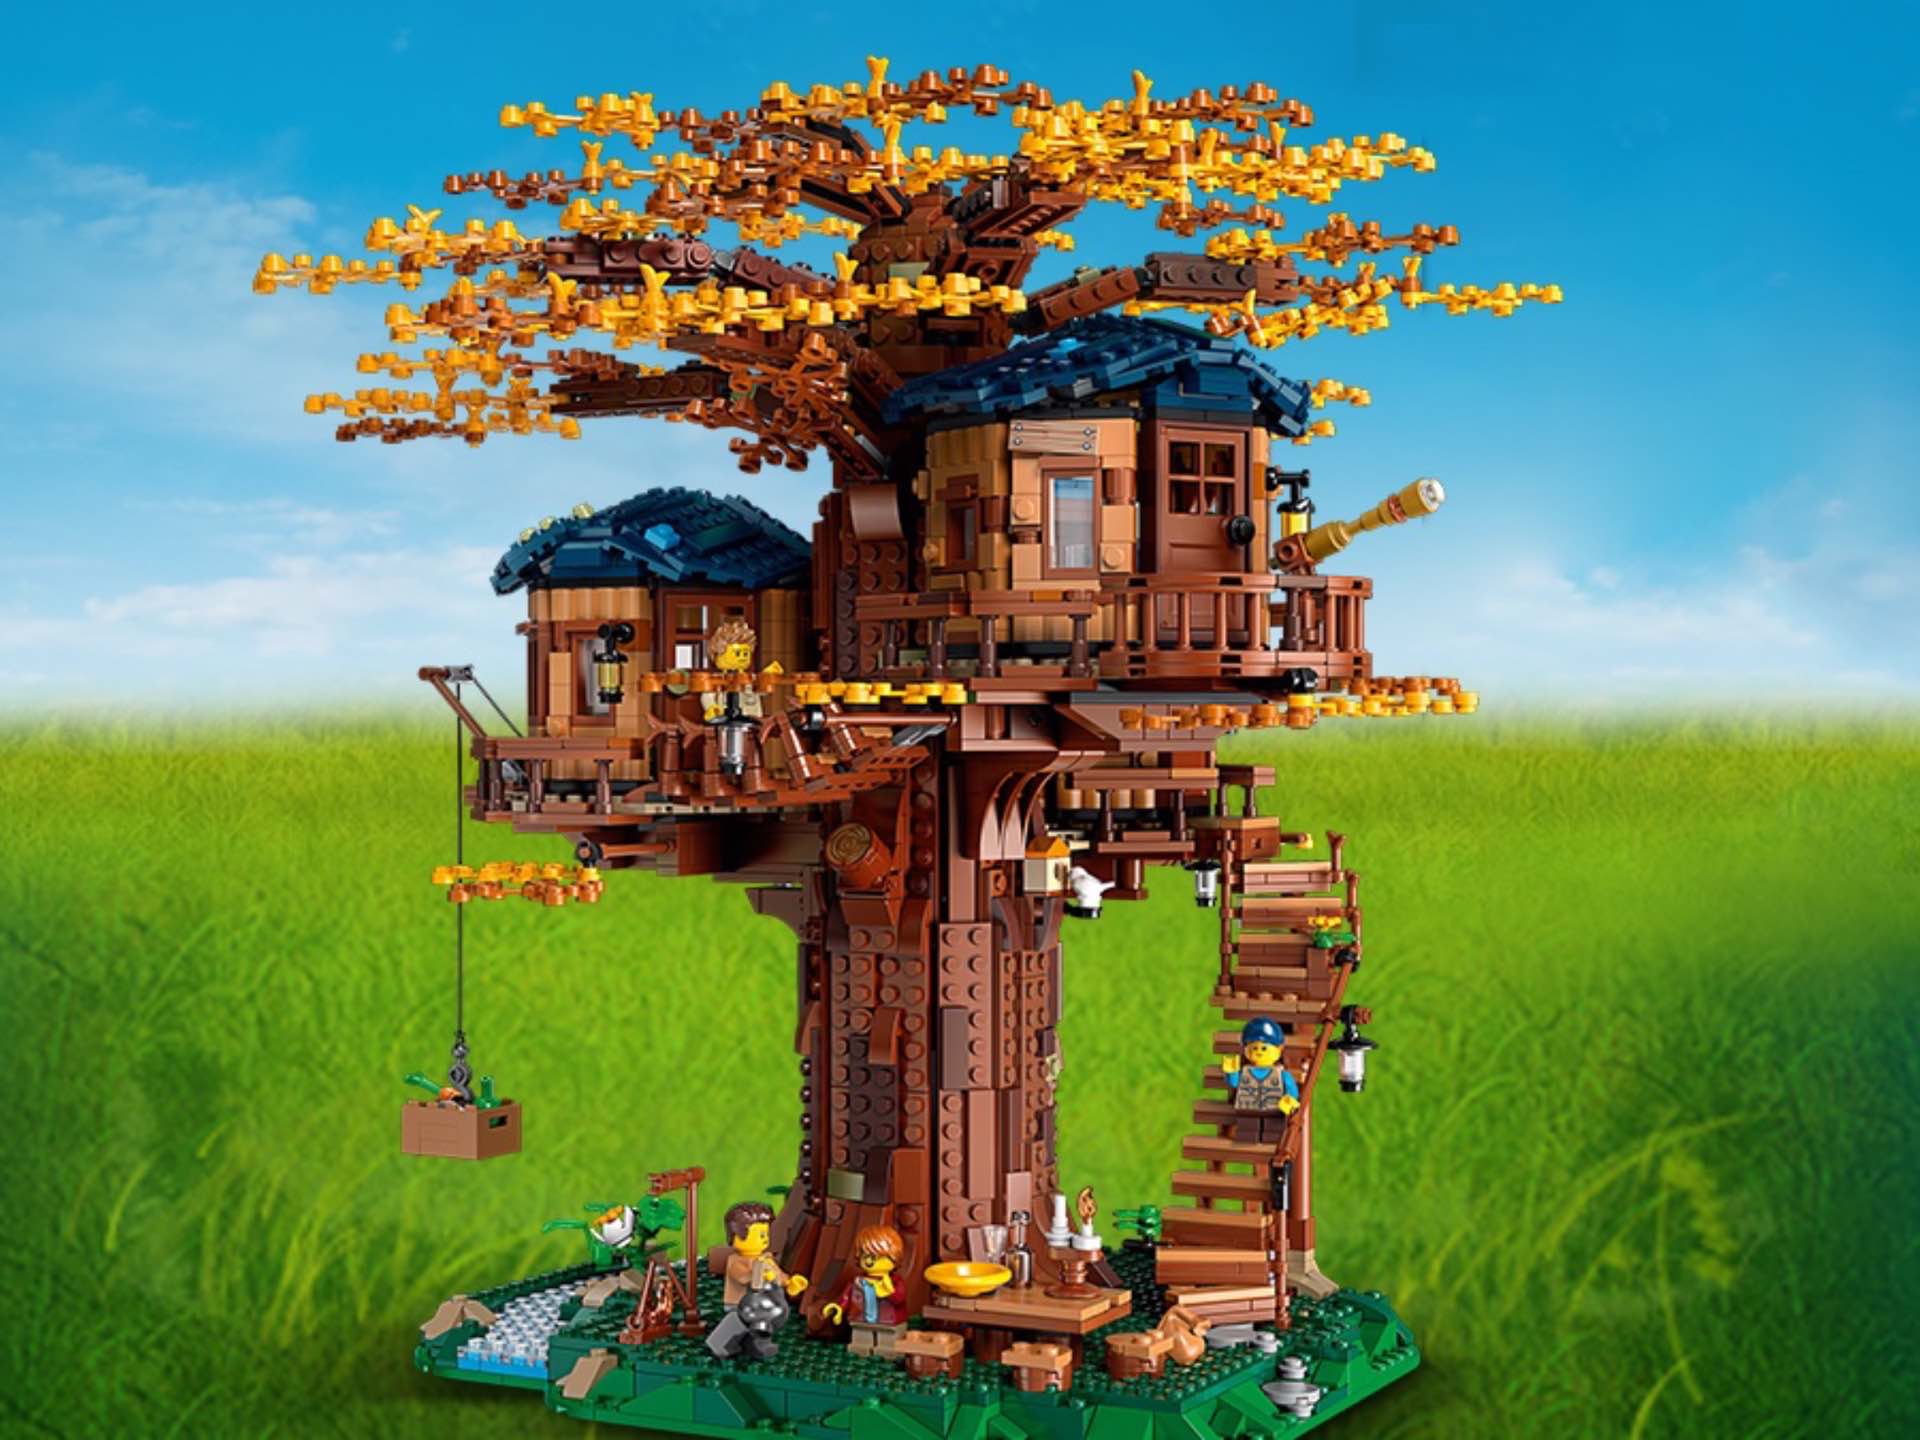 lego-ideas-21318-tree-house-model-construction-set